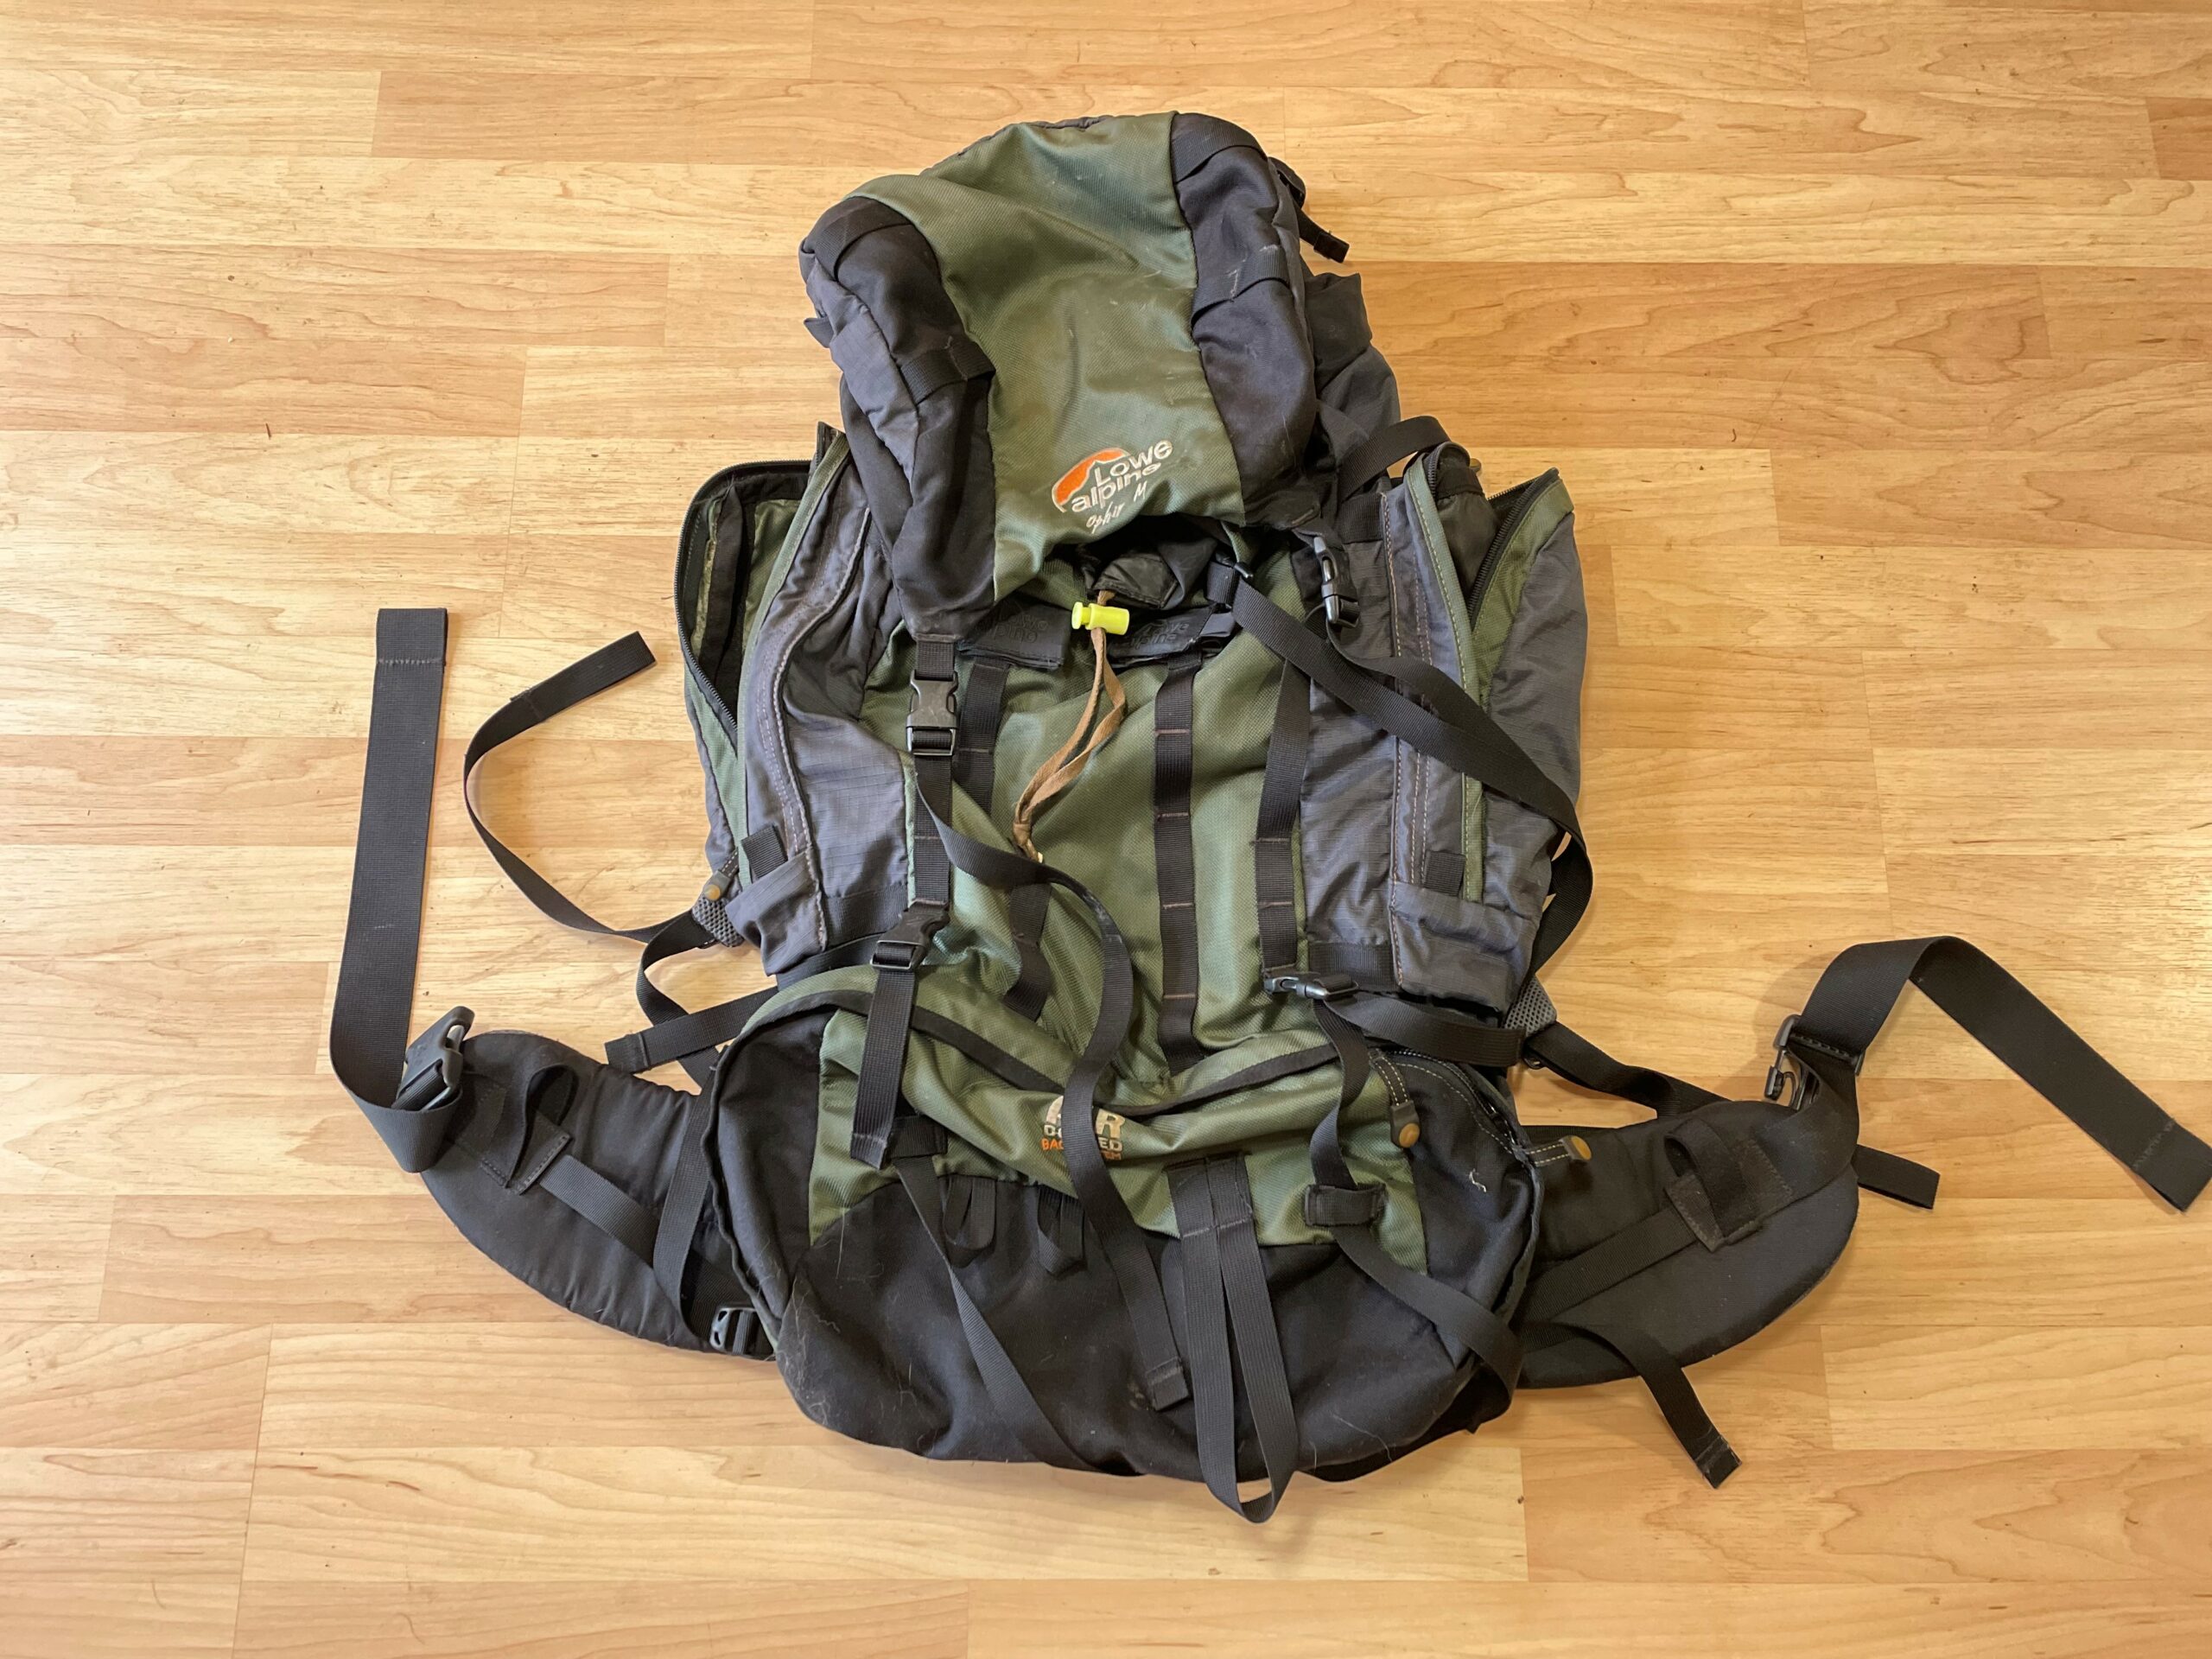 Lowe Alpine backpack